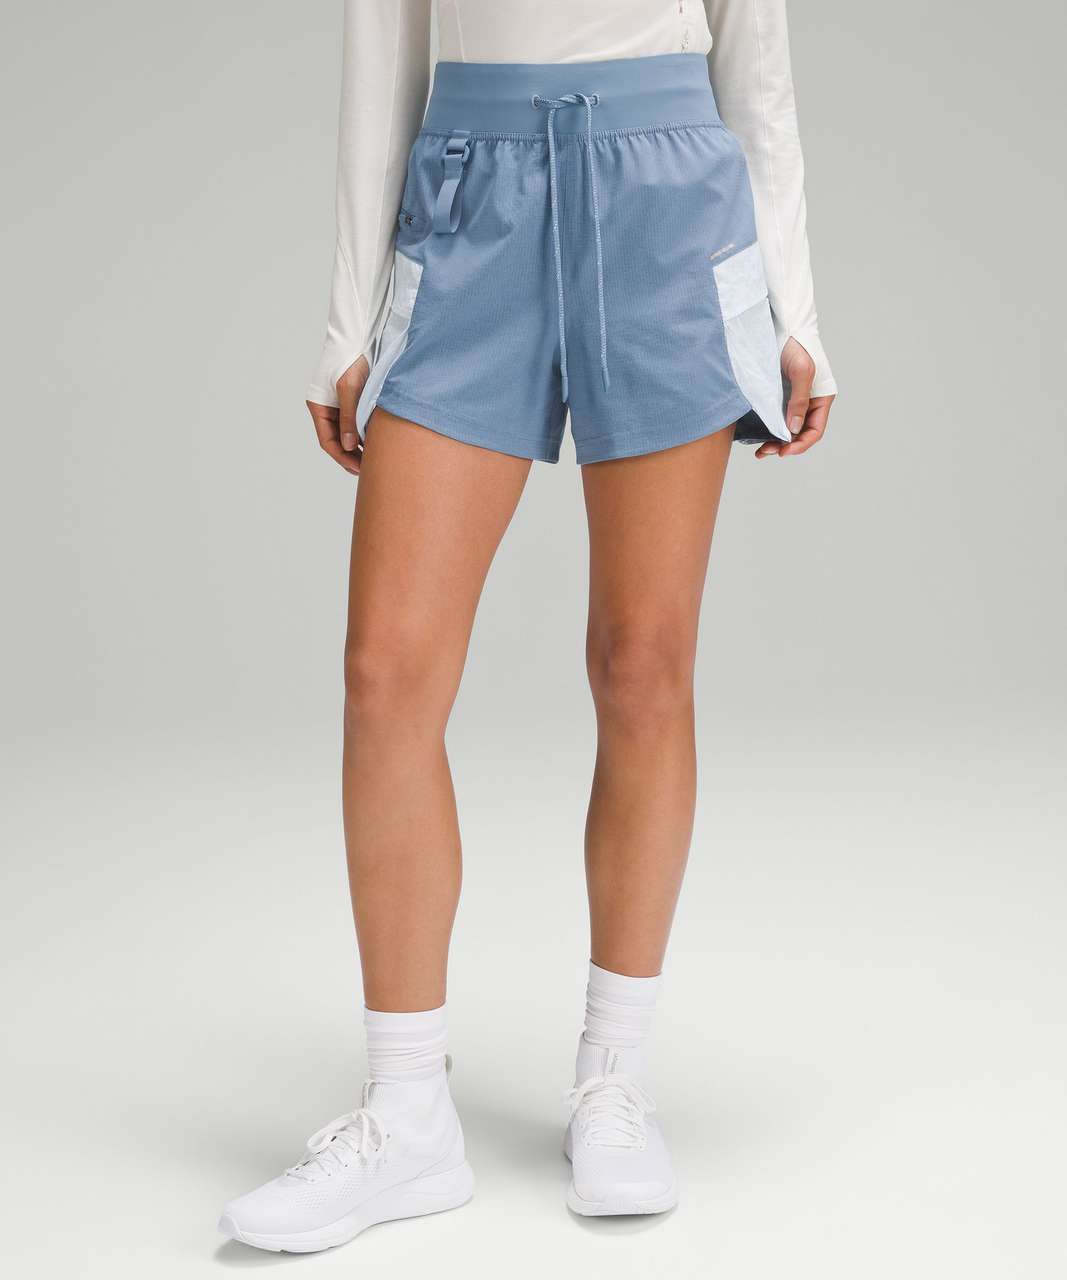 Lululemon Real Quick Shorts Women Size 4 Breezy Light Blue - $40